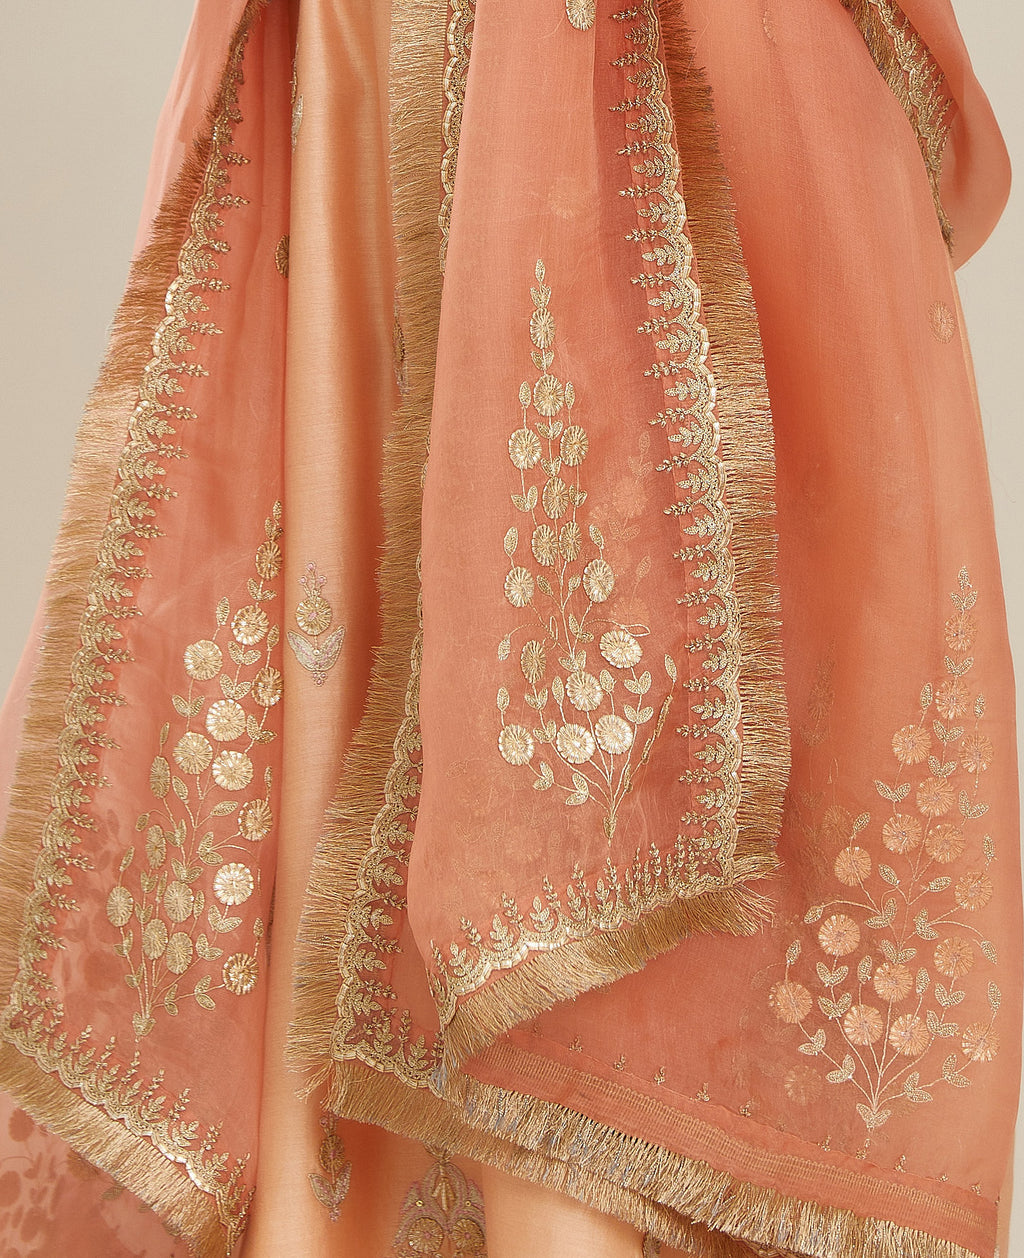 Coral peach silk organza dupatta with delicate gold zari and gota embroidery border running along all edges.